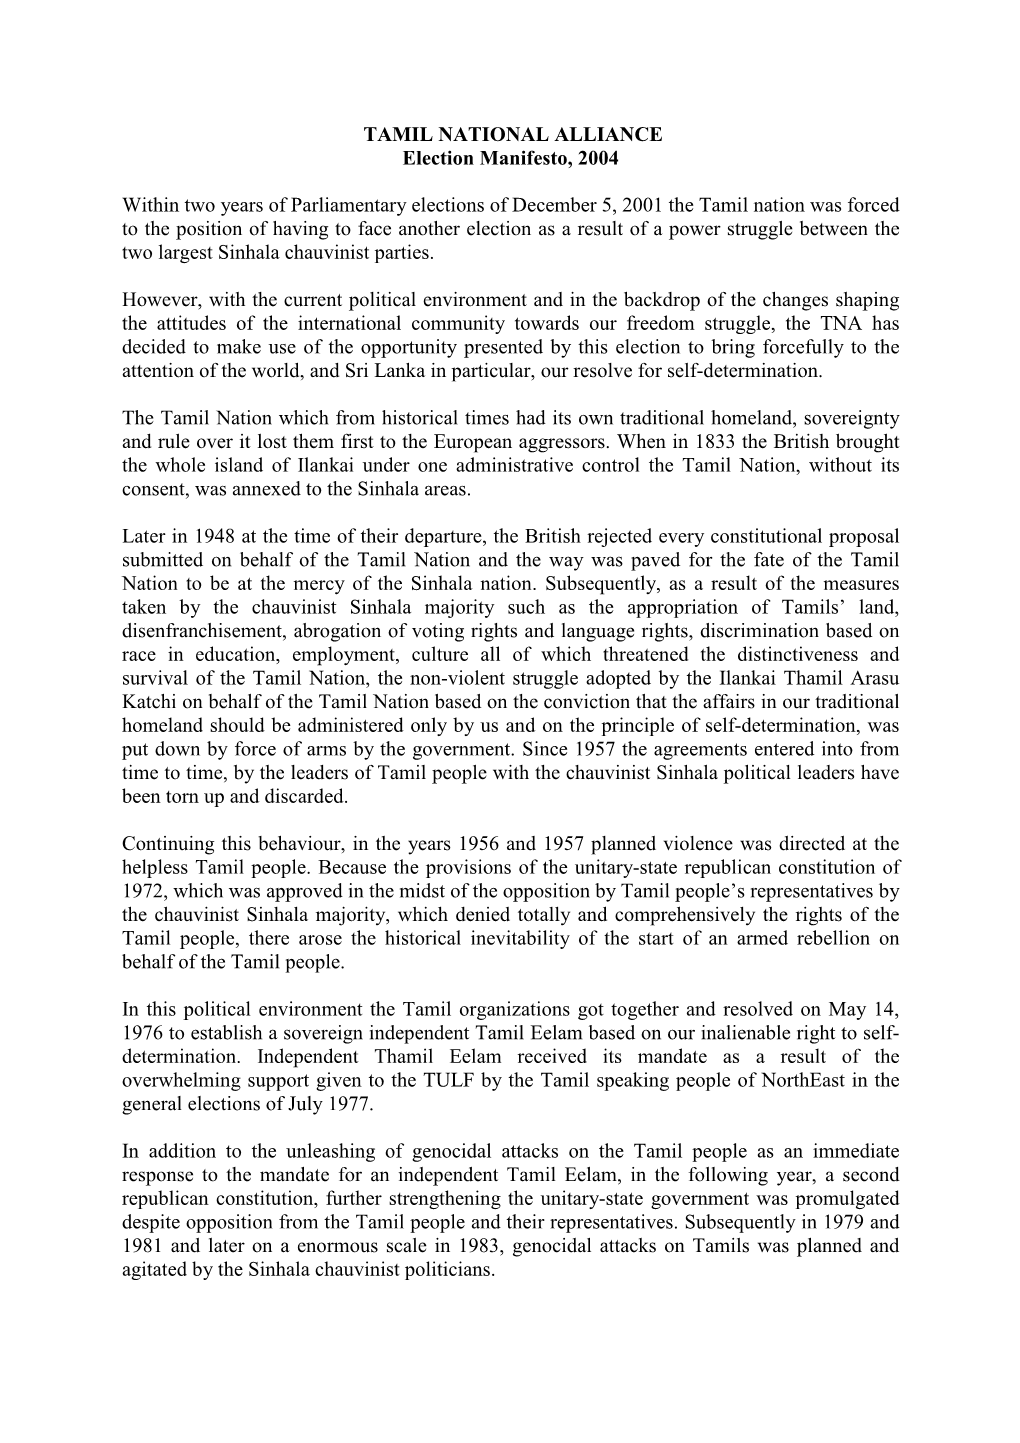 TAMIL NATIONAL ALLIANCE Election Manifesto 2004